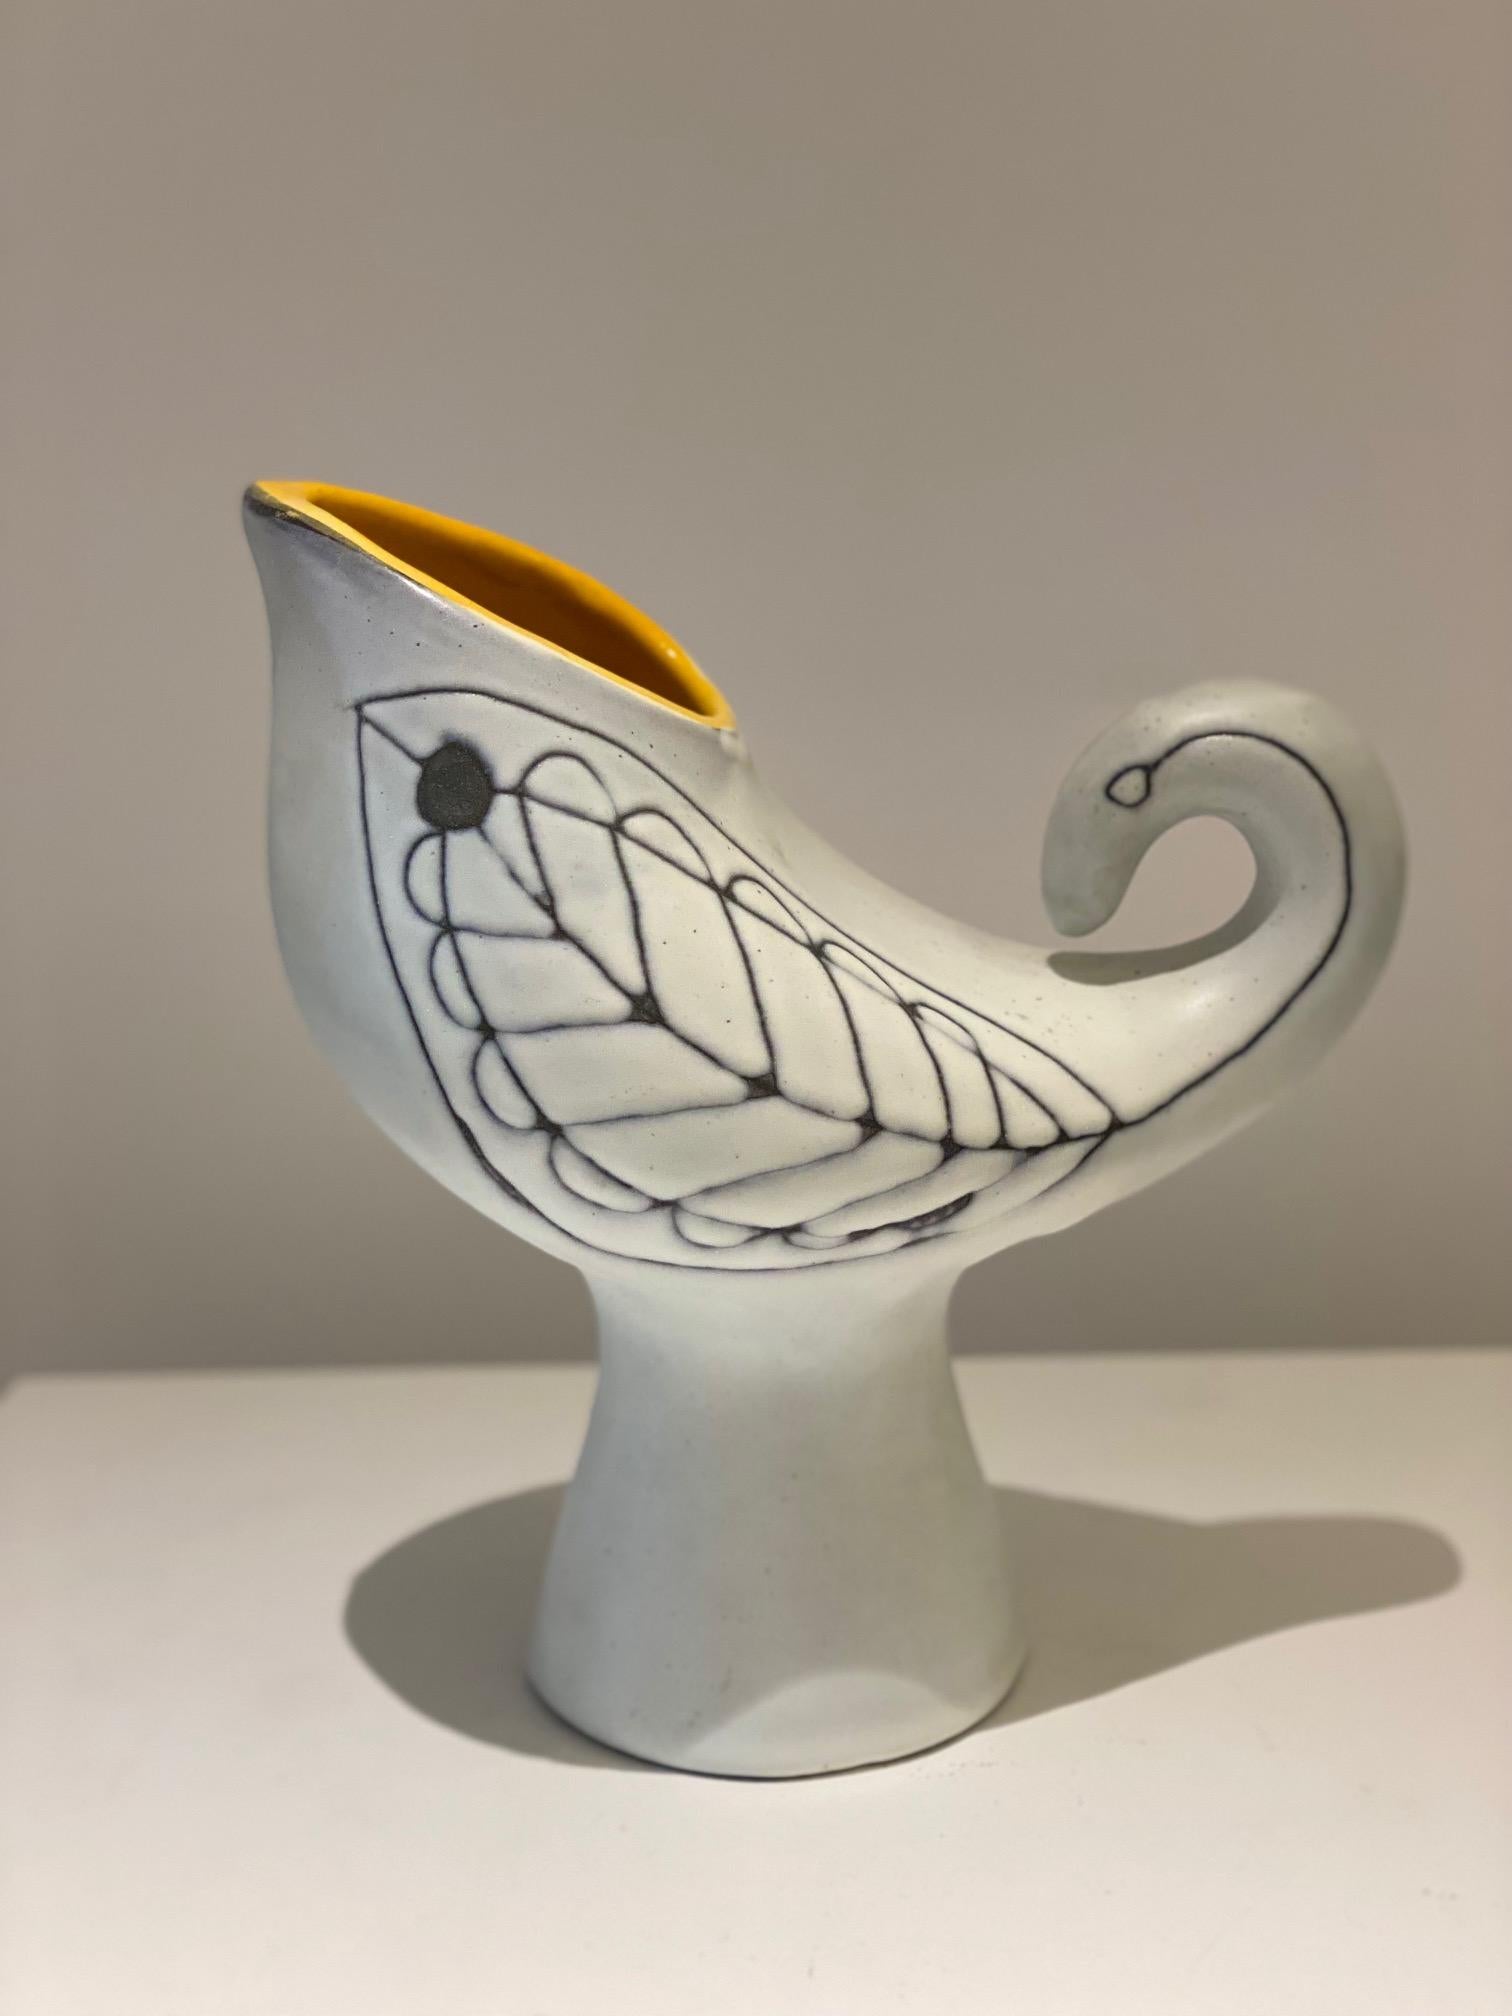 Roger Capron (1922-2006)
Stylized Bird vase signed Capron Vallauris circa 1950
Measures: H 22 cm x L 20 cm.